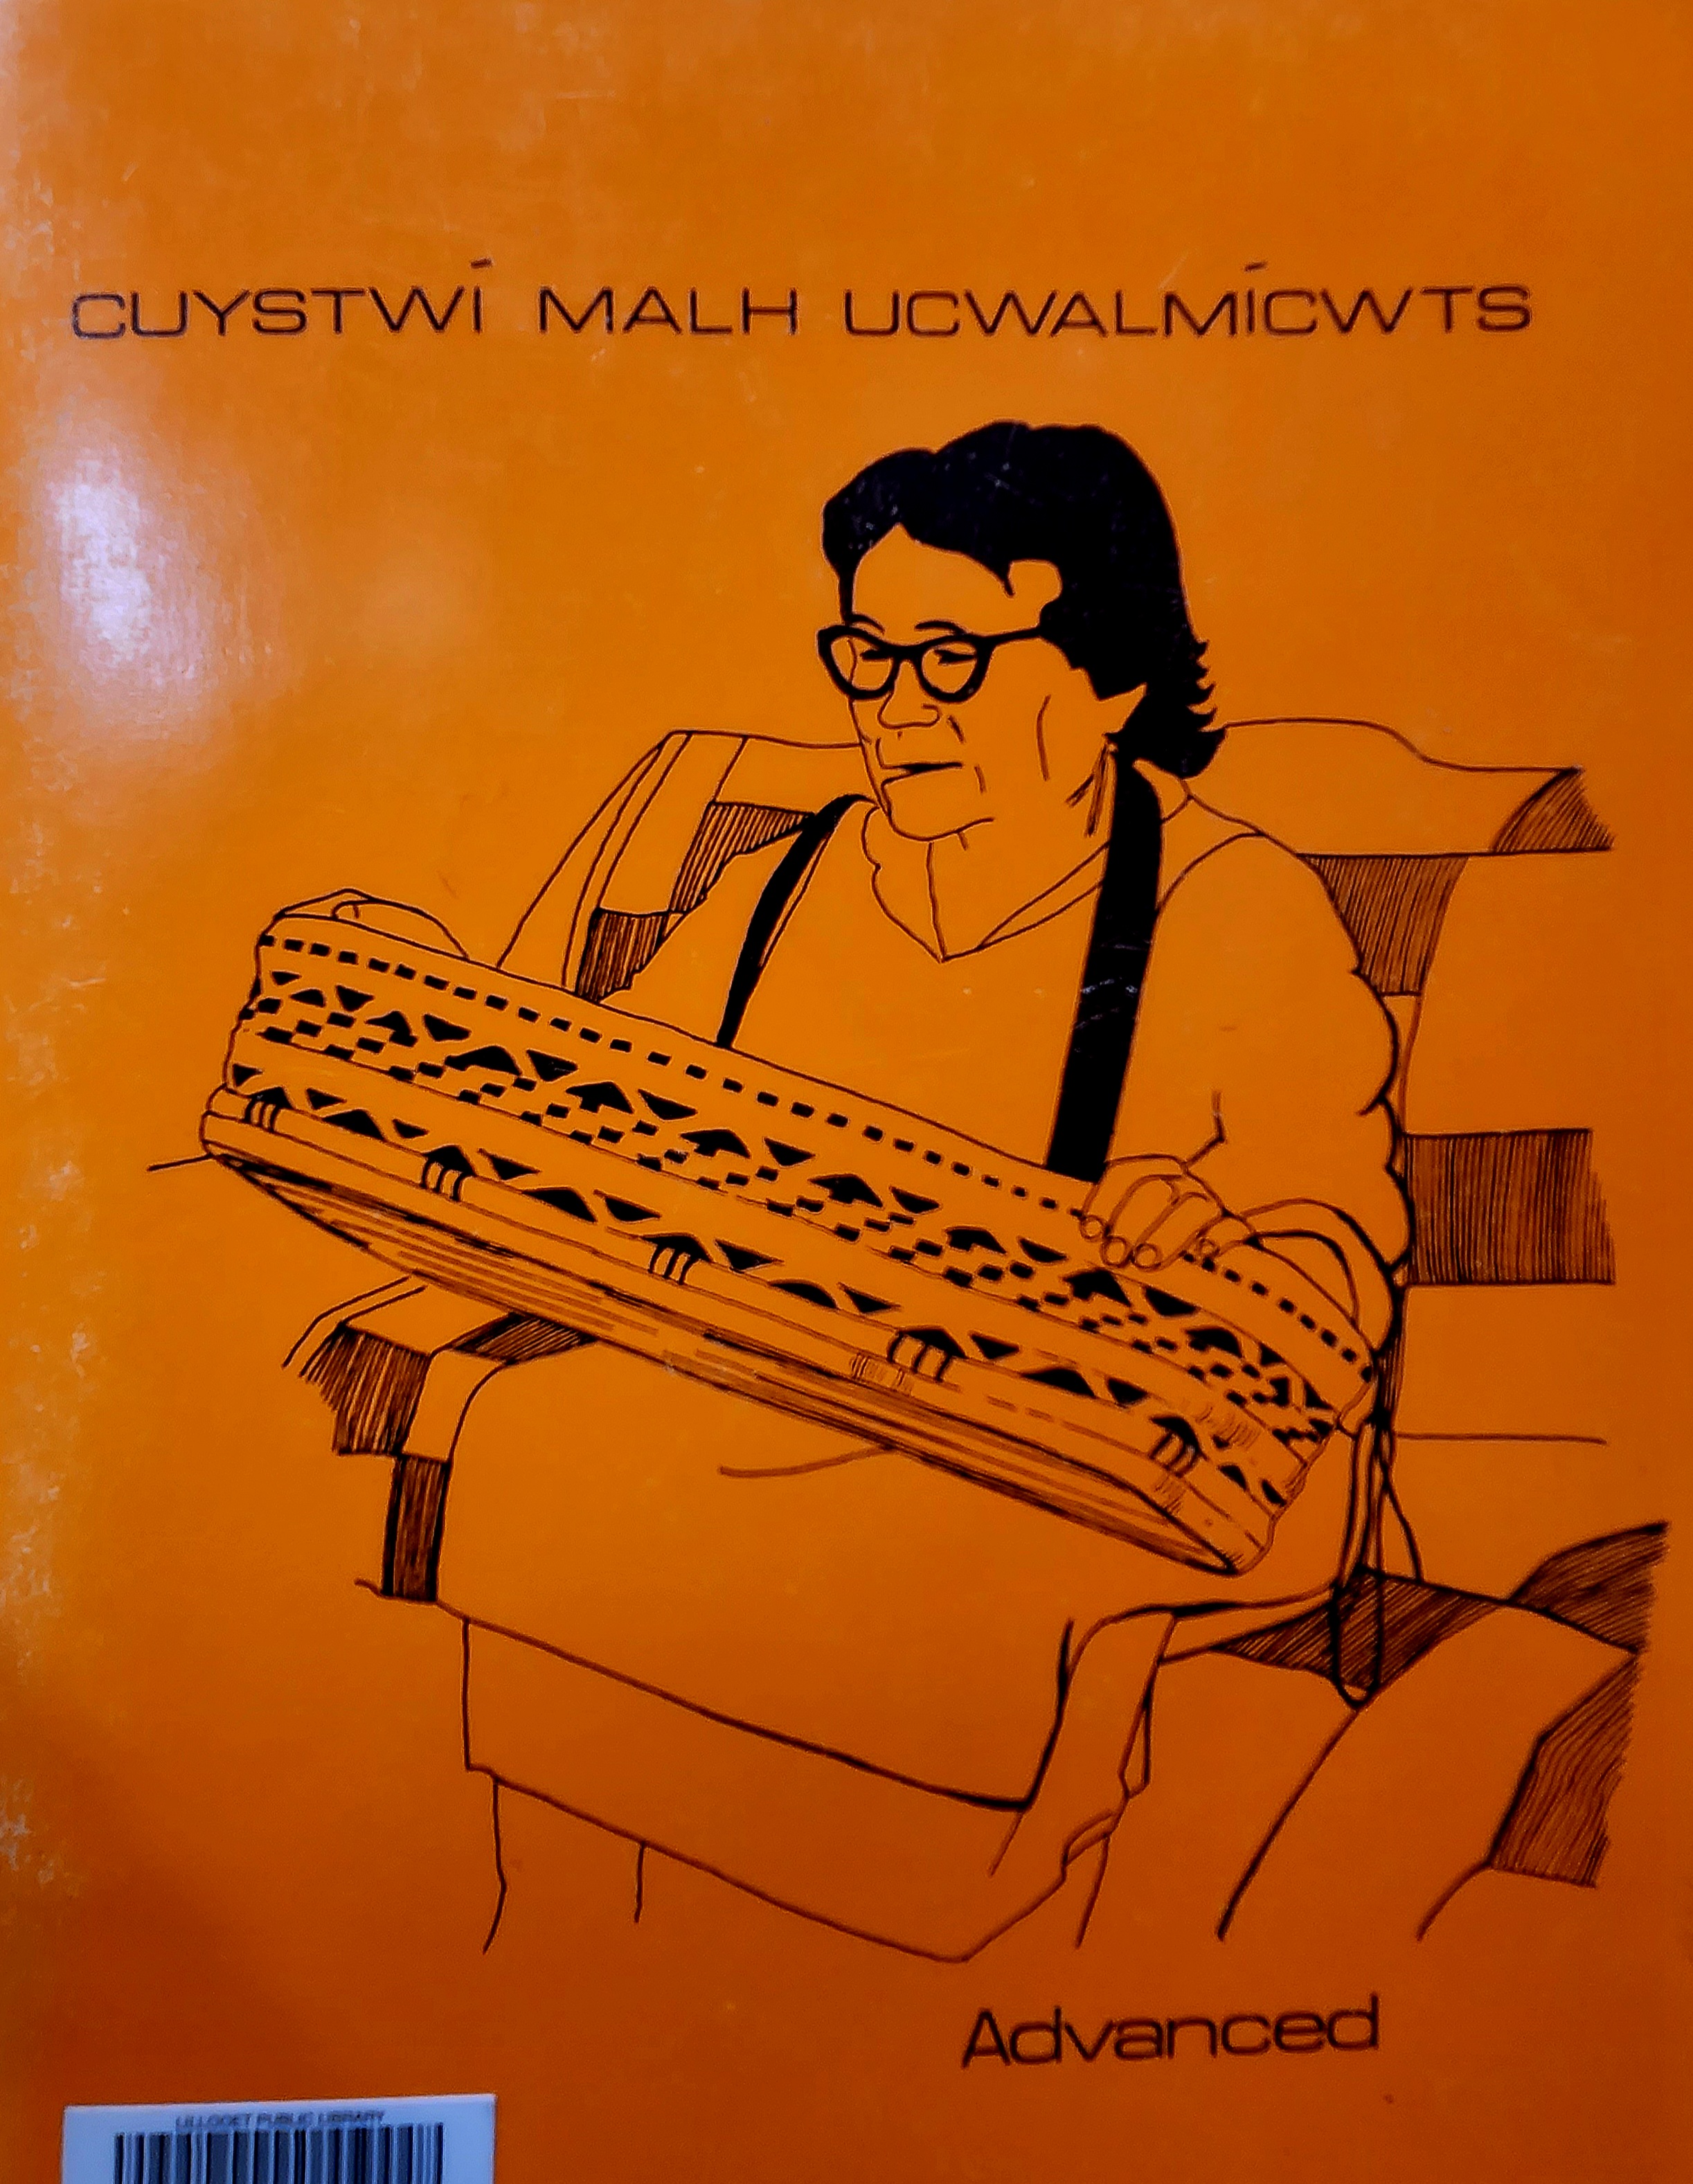 Cuystwi Malh Ucwalmicwts